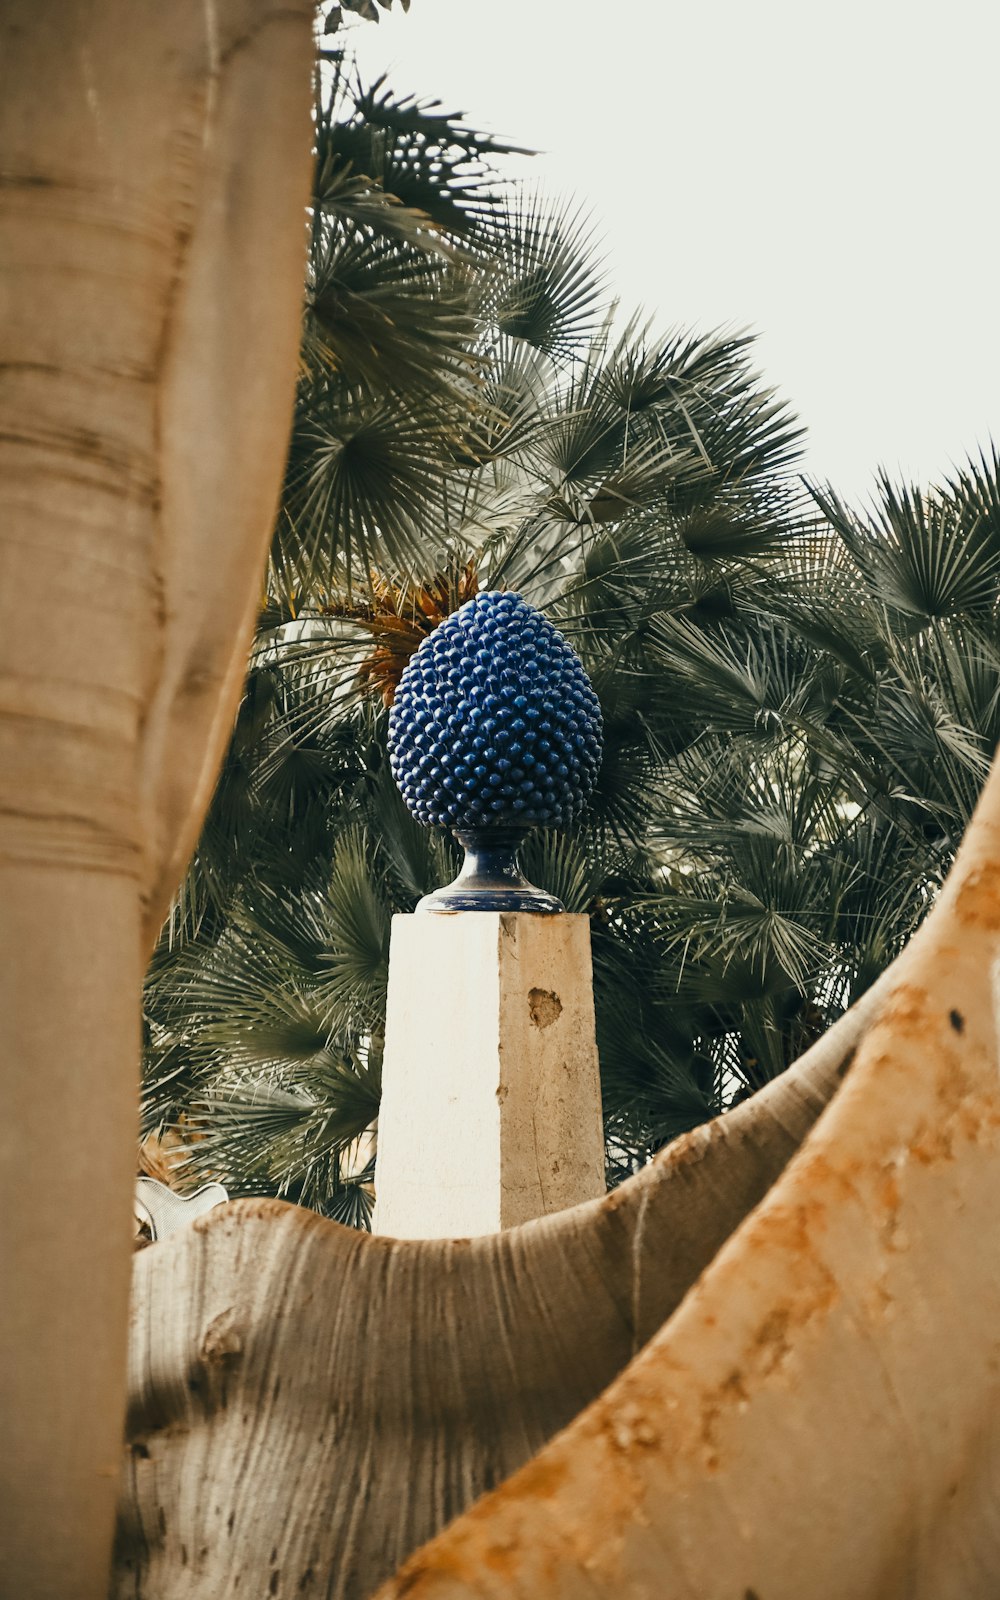 a blue ball sitting on top of a cement pillar